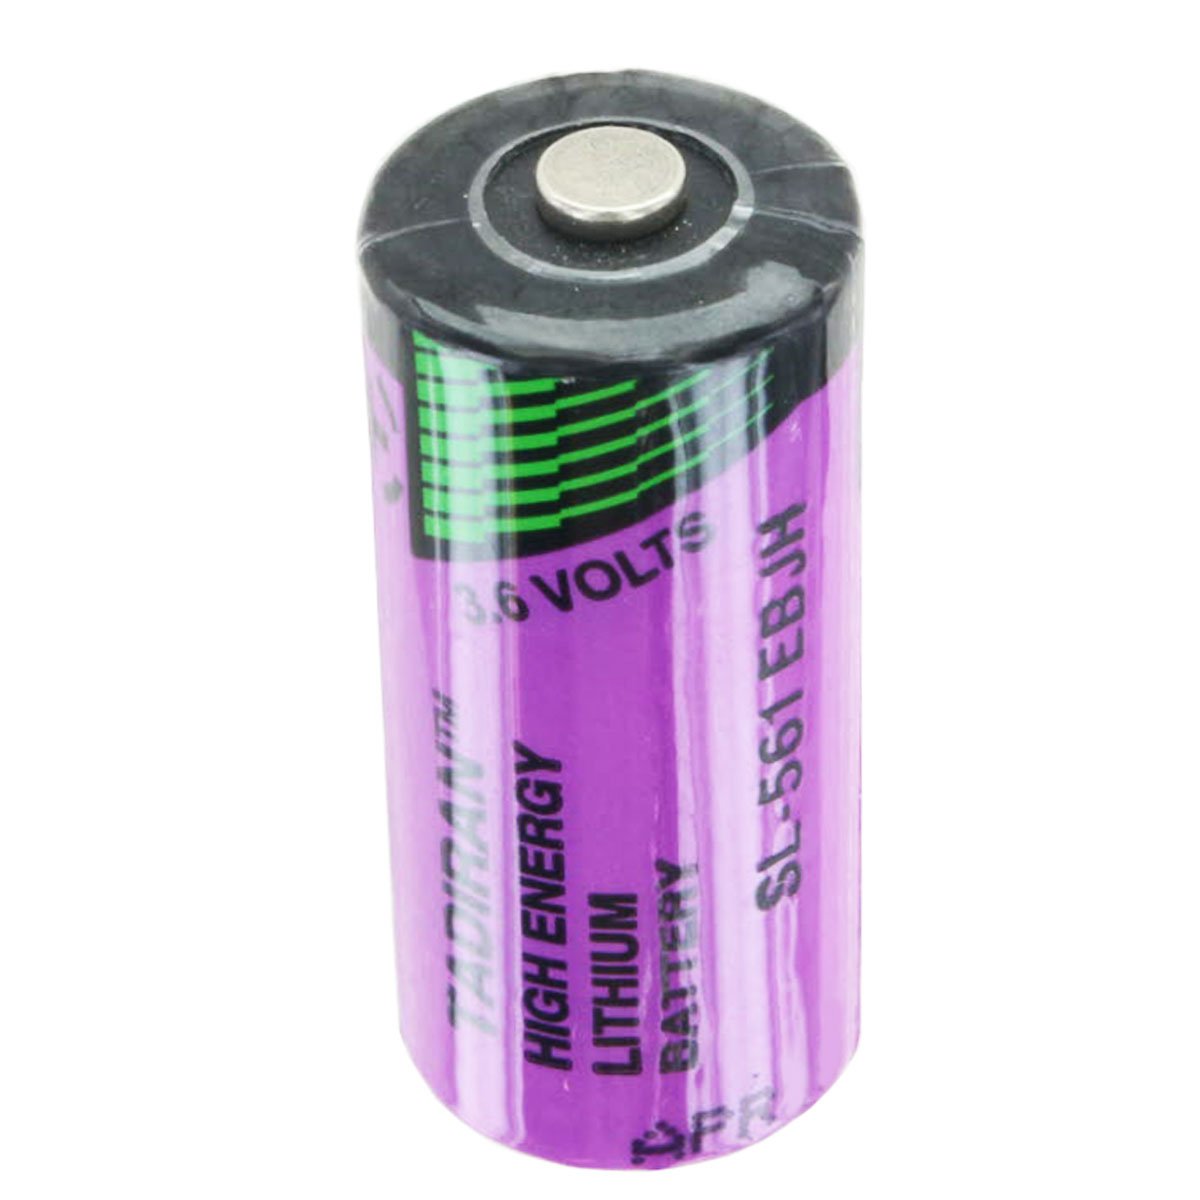 Tadiran SL-561/S Lithium Batterie 3,6V 2/3 AA